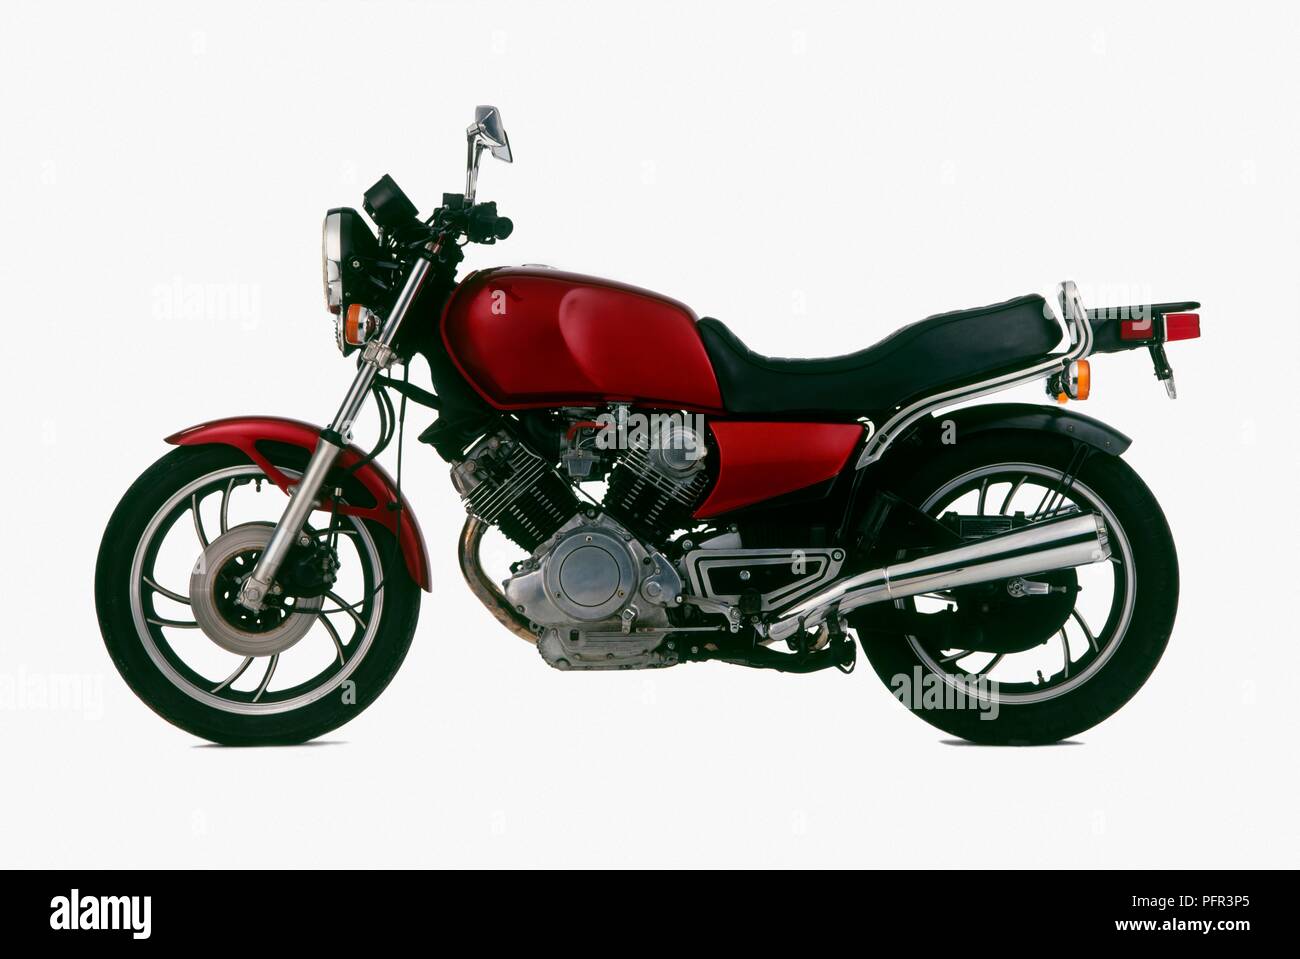 Moto YAMAHA XV 920, side view Photo Stock - Alamy